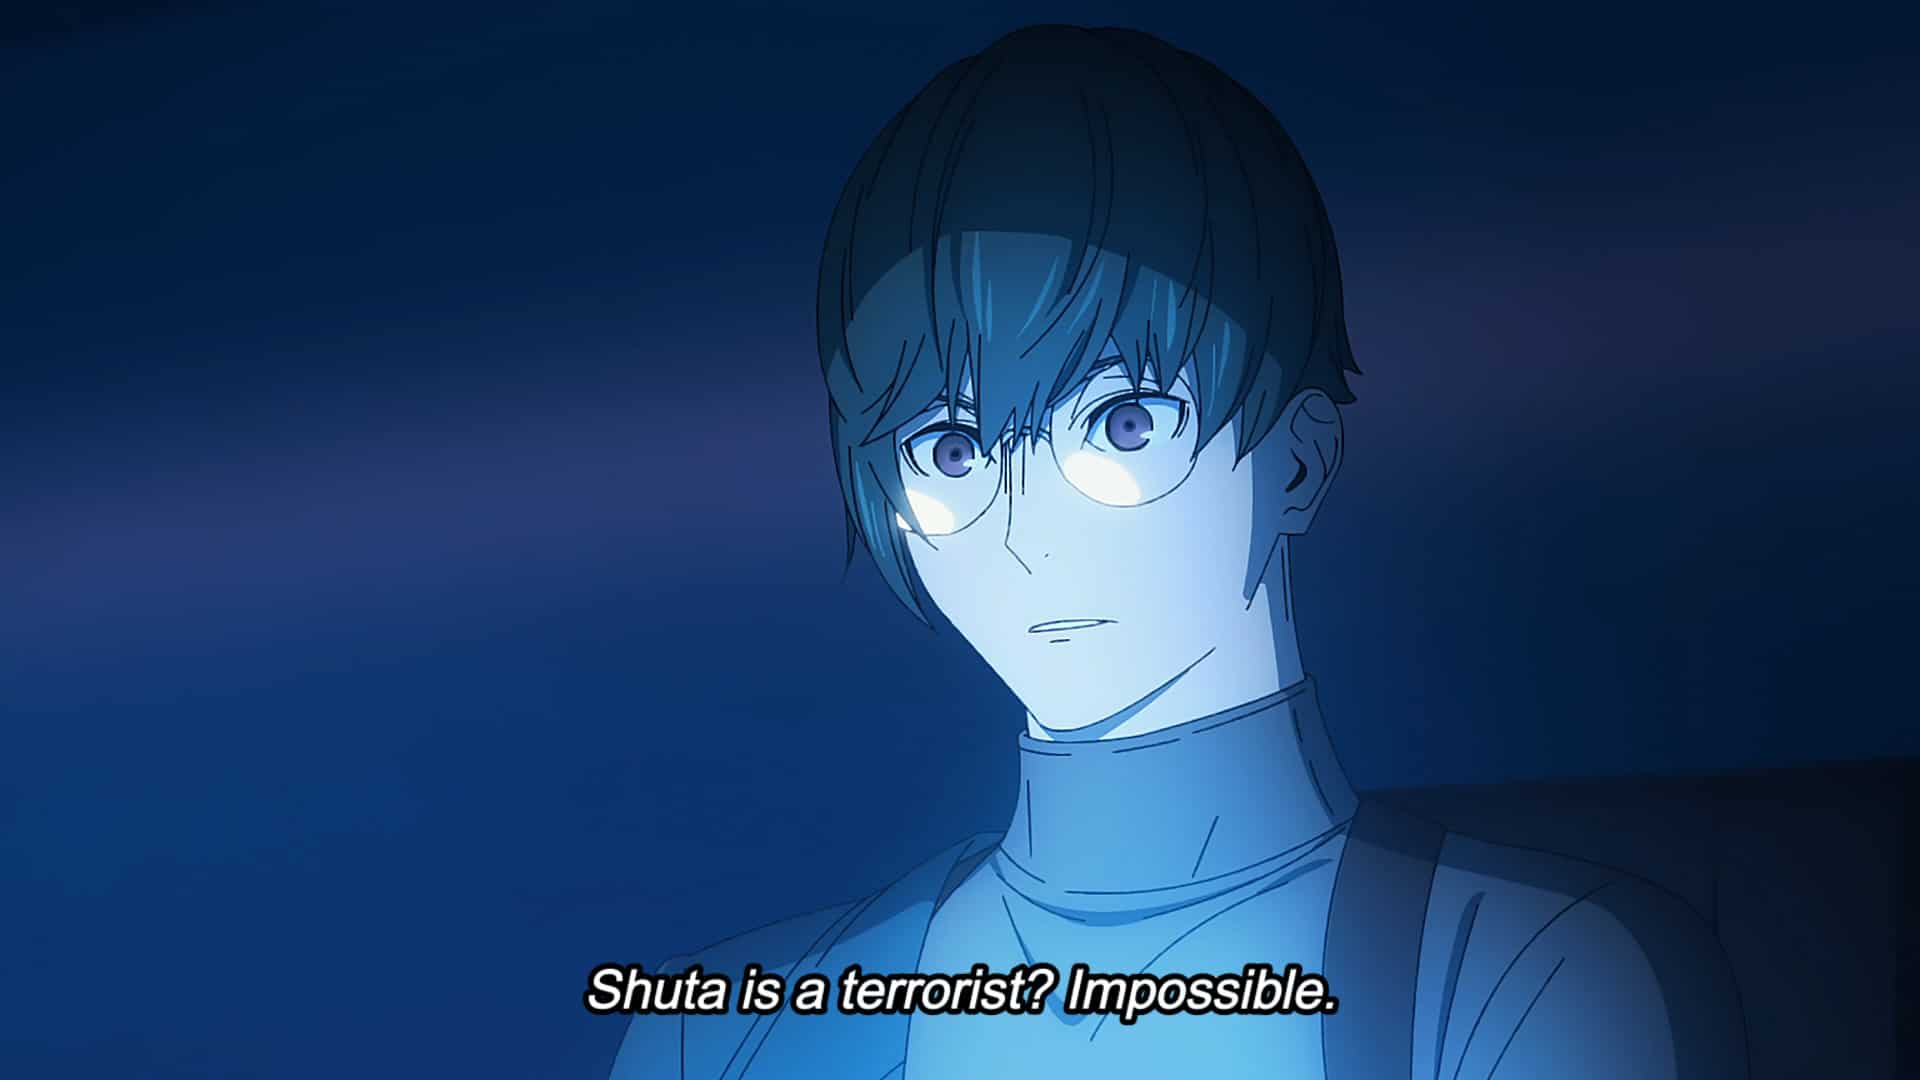 Koki shocked that the Kanae system sees Shuta as a terrorist